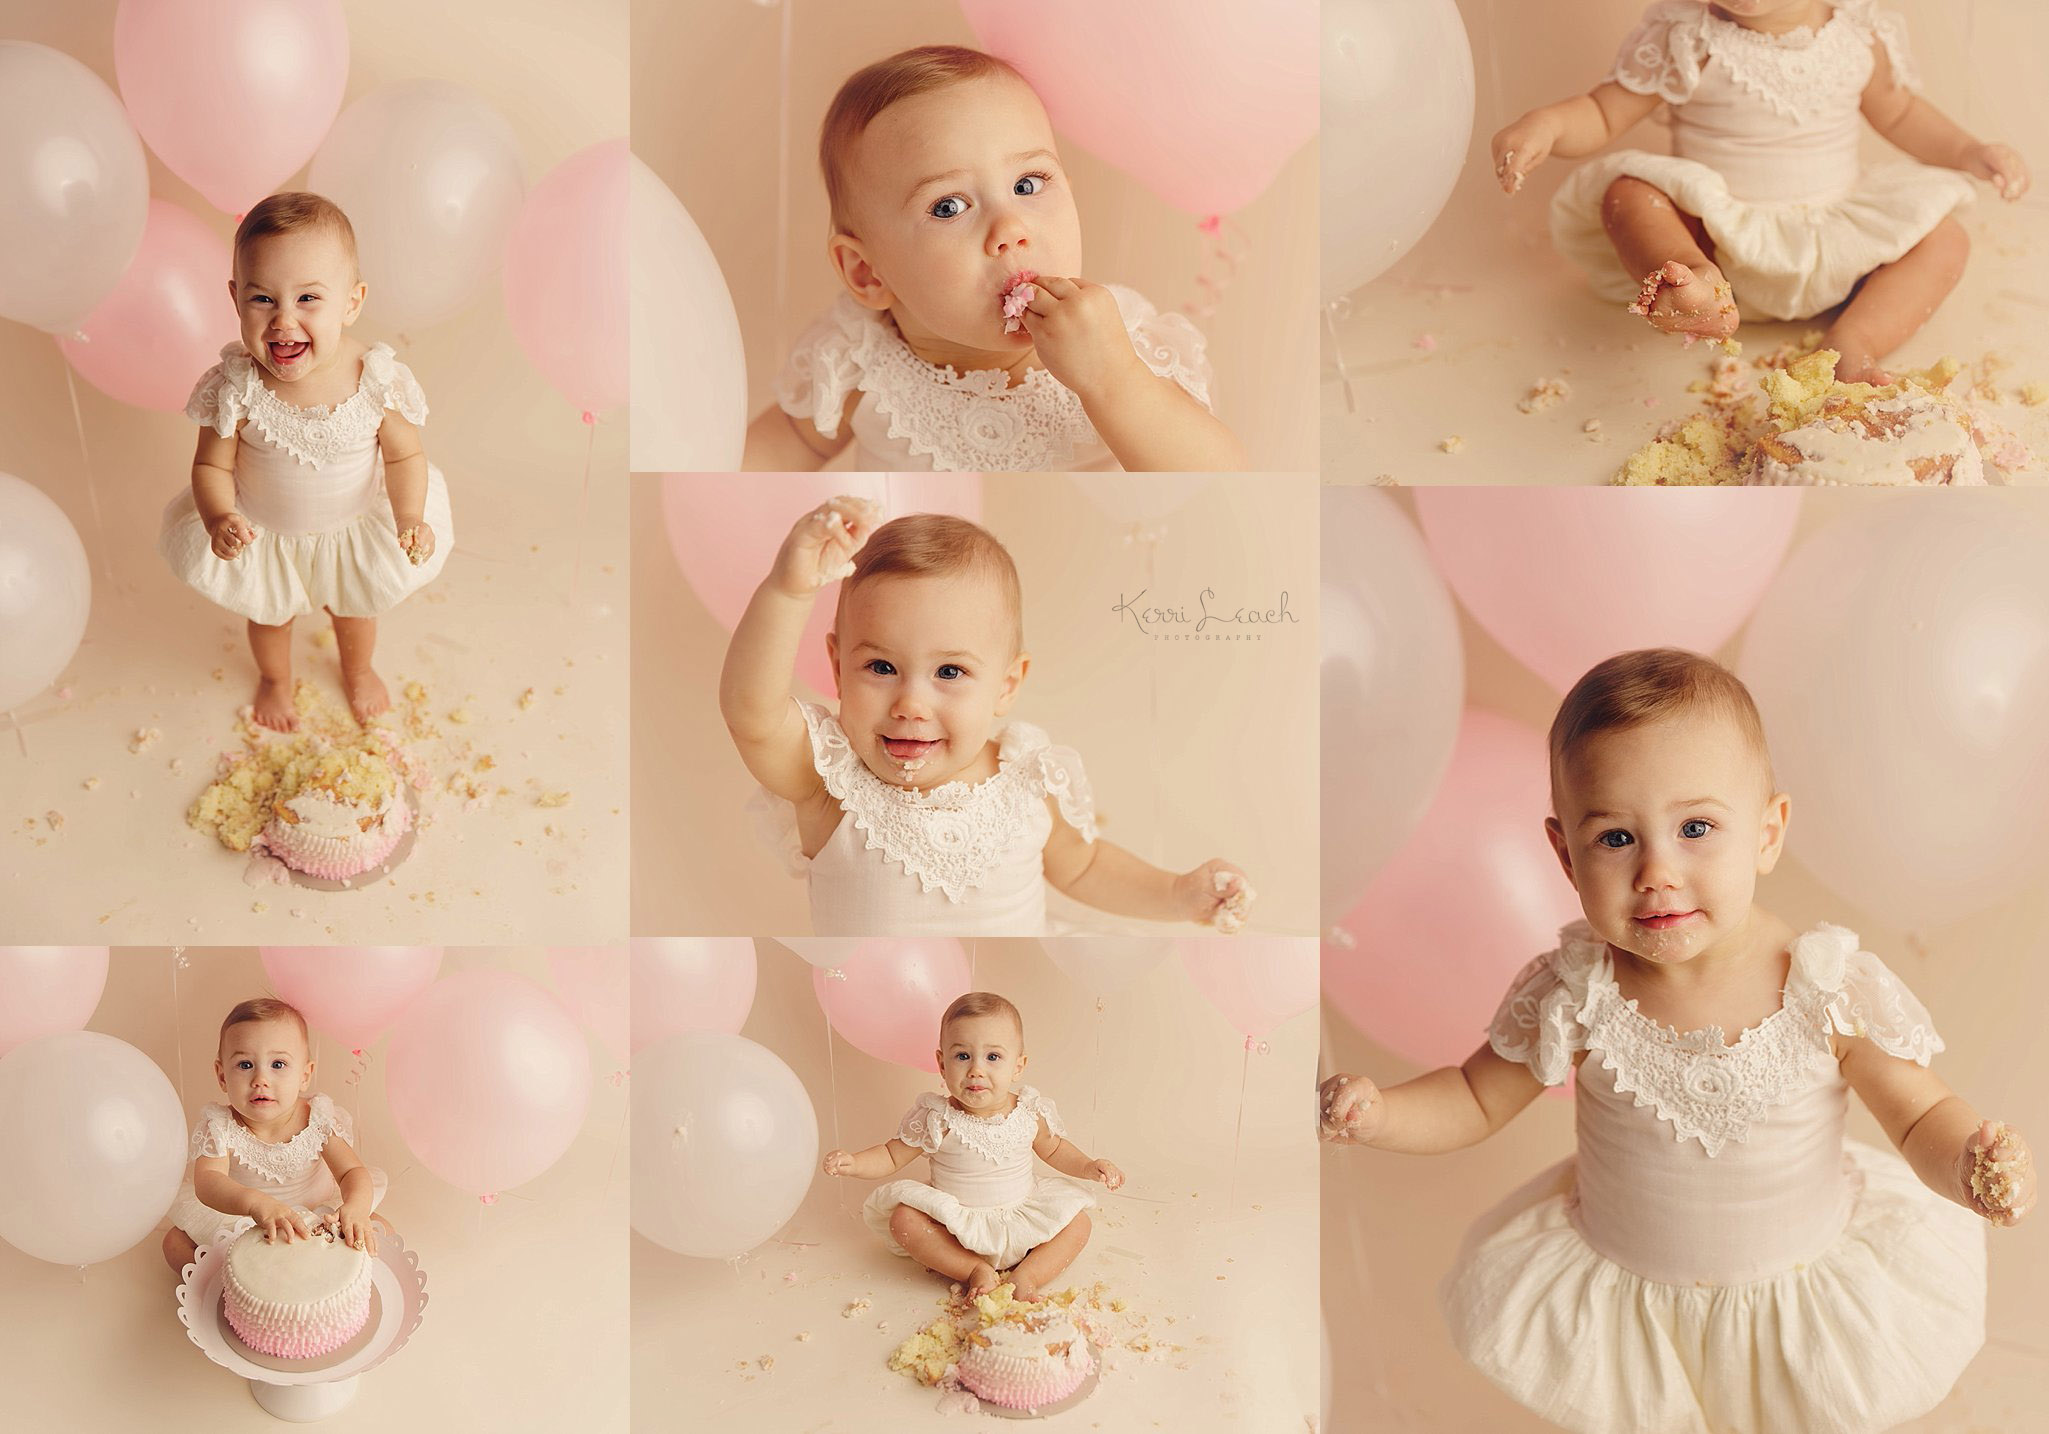 Kerri Leach Photography-Cake smash session-1 year session-Evansville, In photographer-baby photographer Evansville